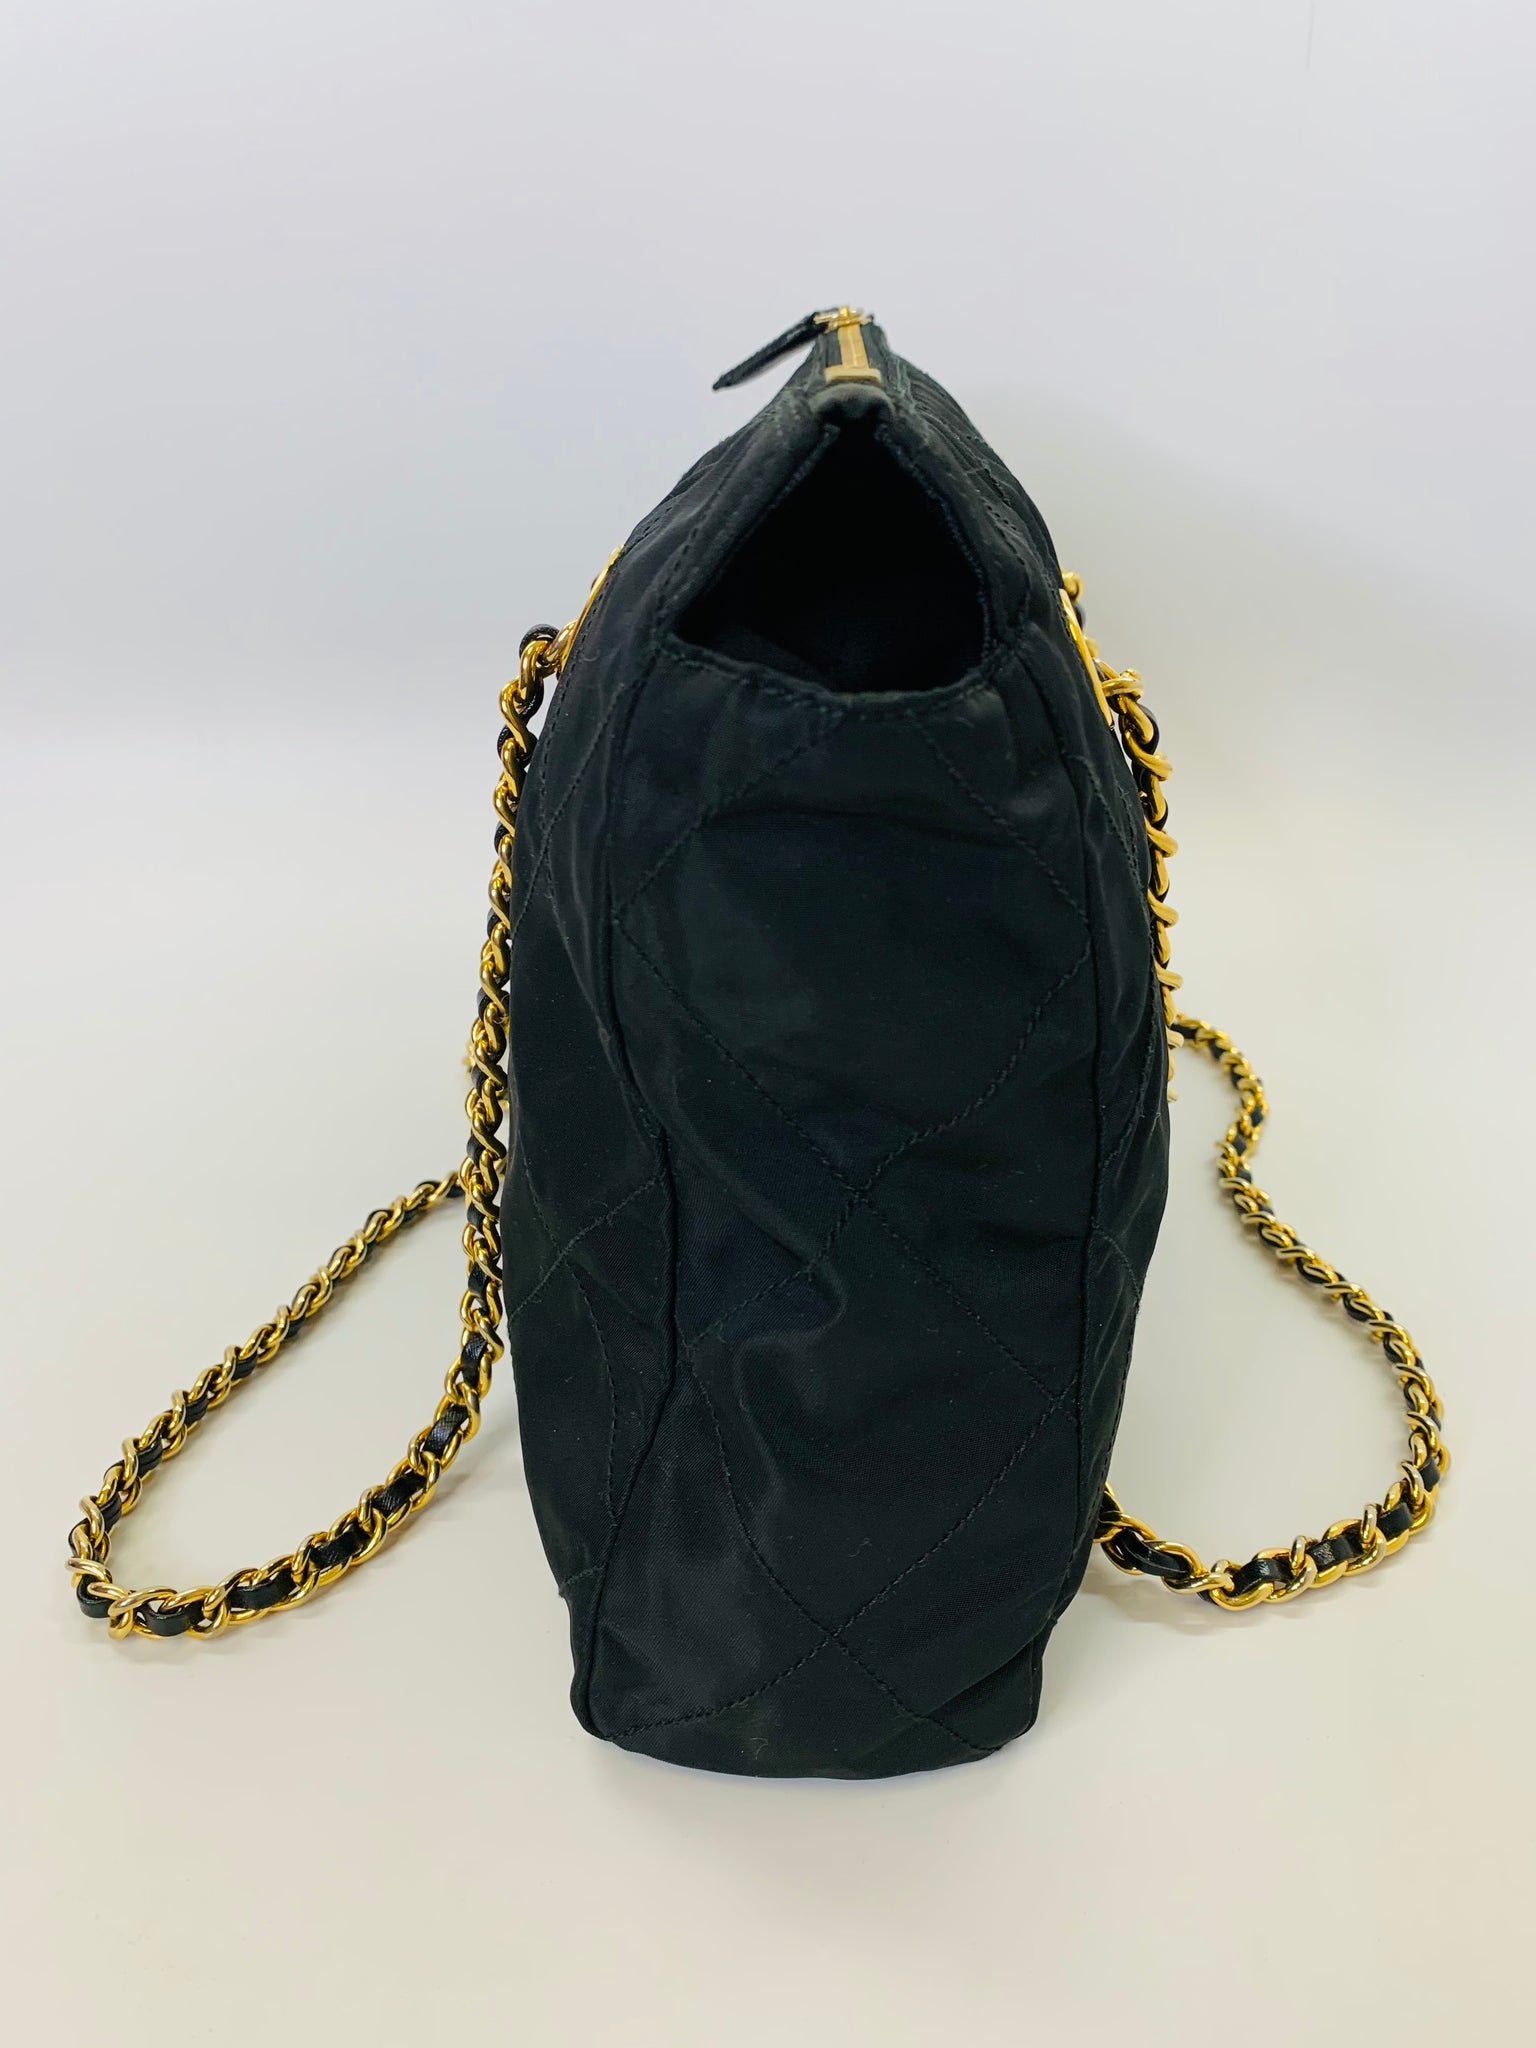 Prada Mini Tote Bag Nylon Black Handbag Bag